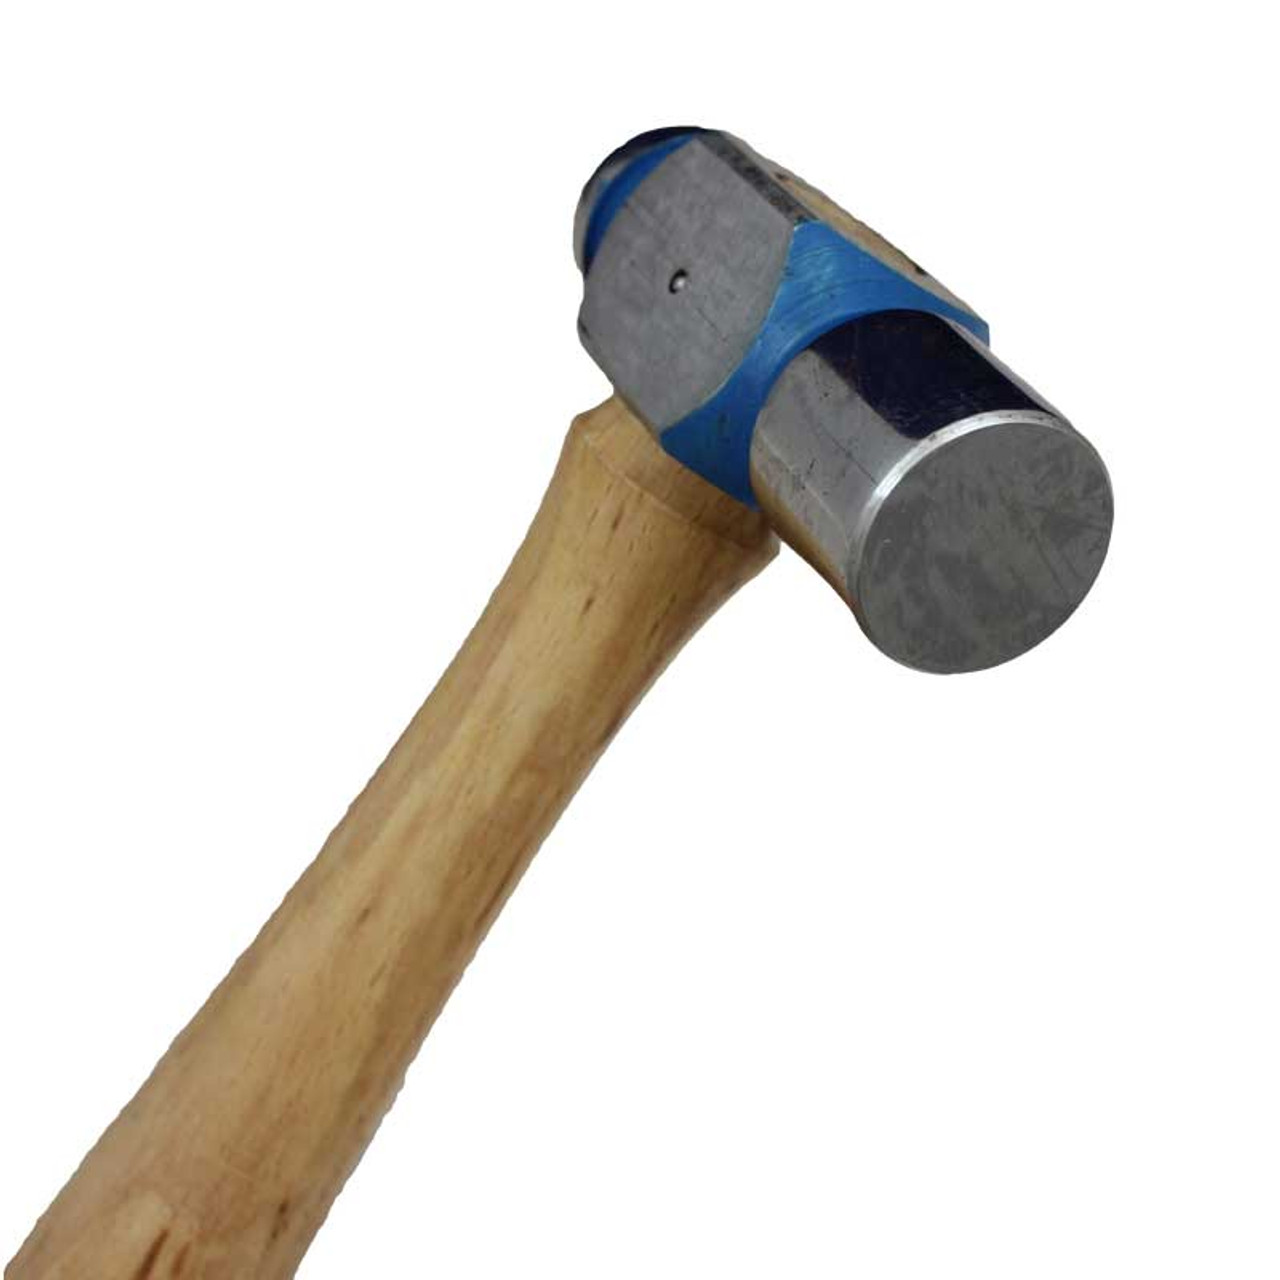 8 oz. Stubby Ball Peen Hammer